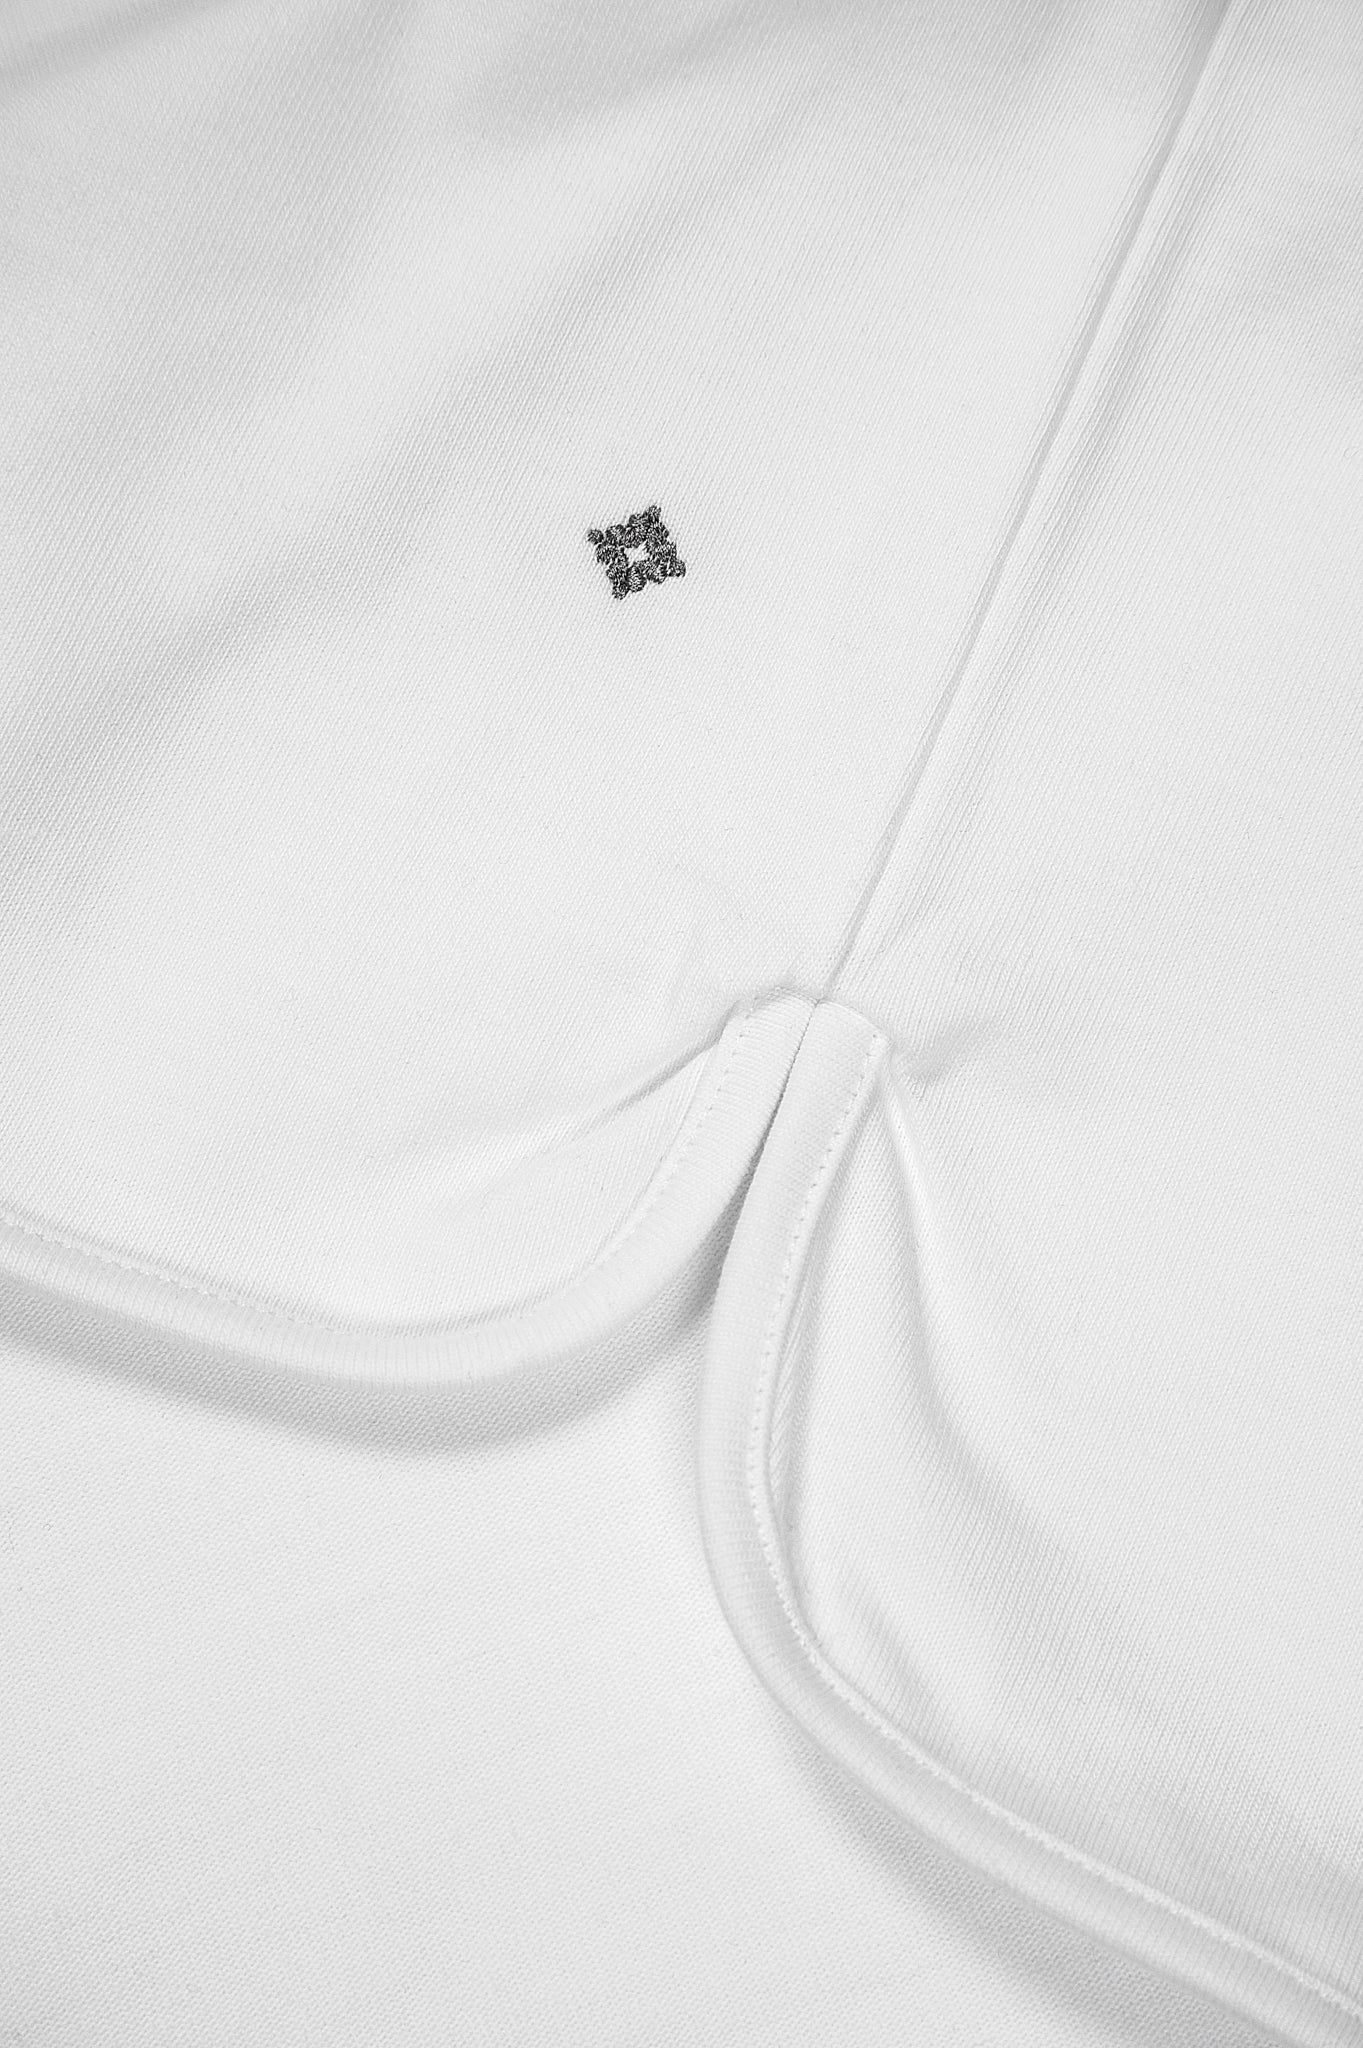 Alaric t-shirt Long Sleeves (White)